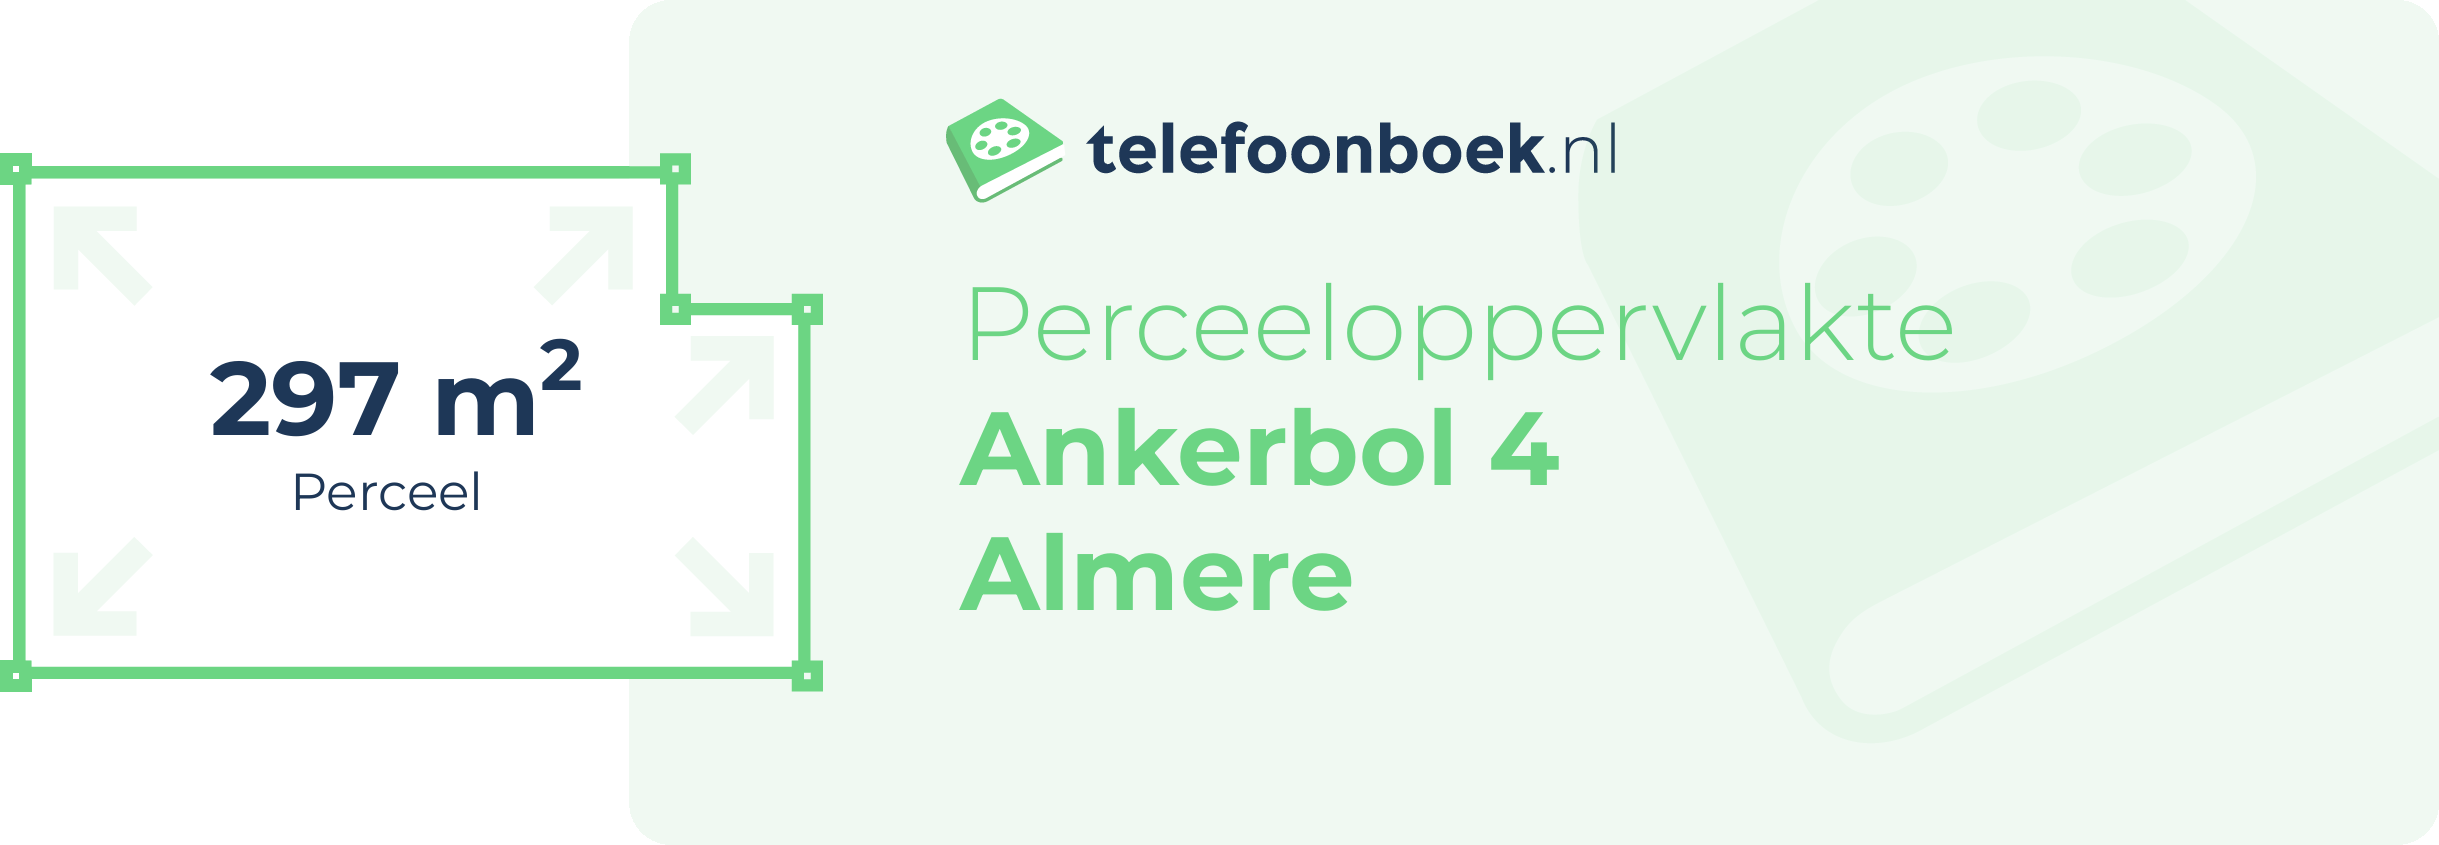 Perceeloppervlakte Ankerbol 4 Almere